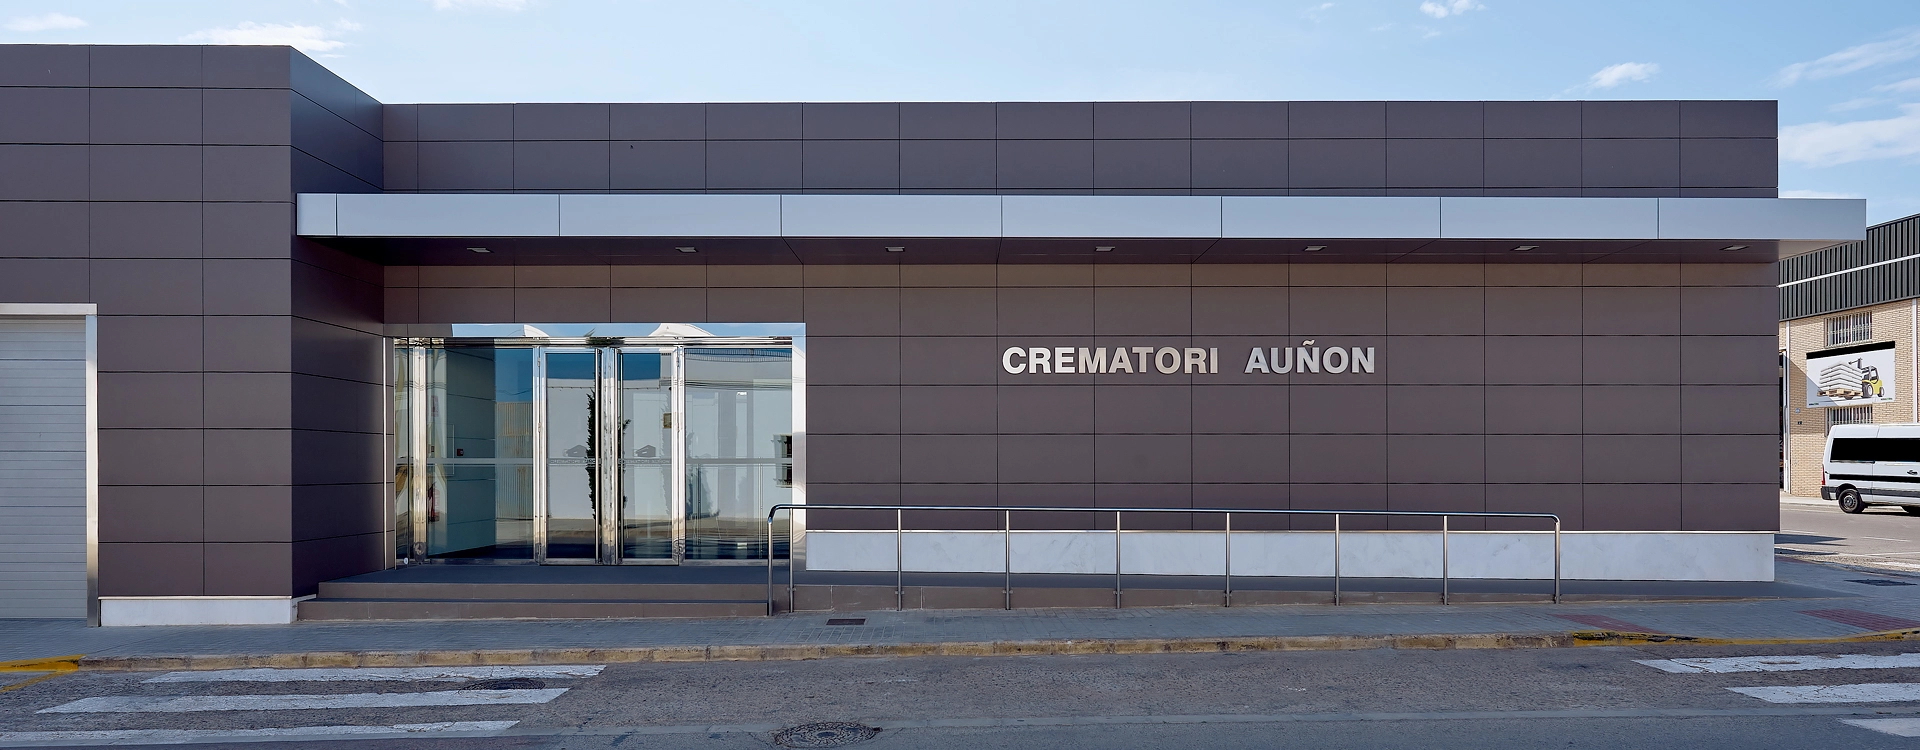 Crematorium Auñon of Meliana, Valencia (Spain)